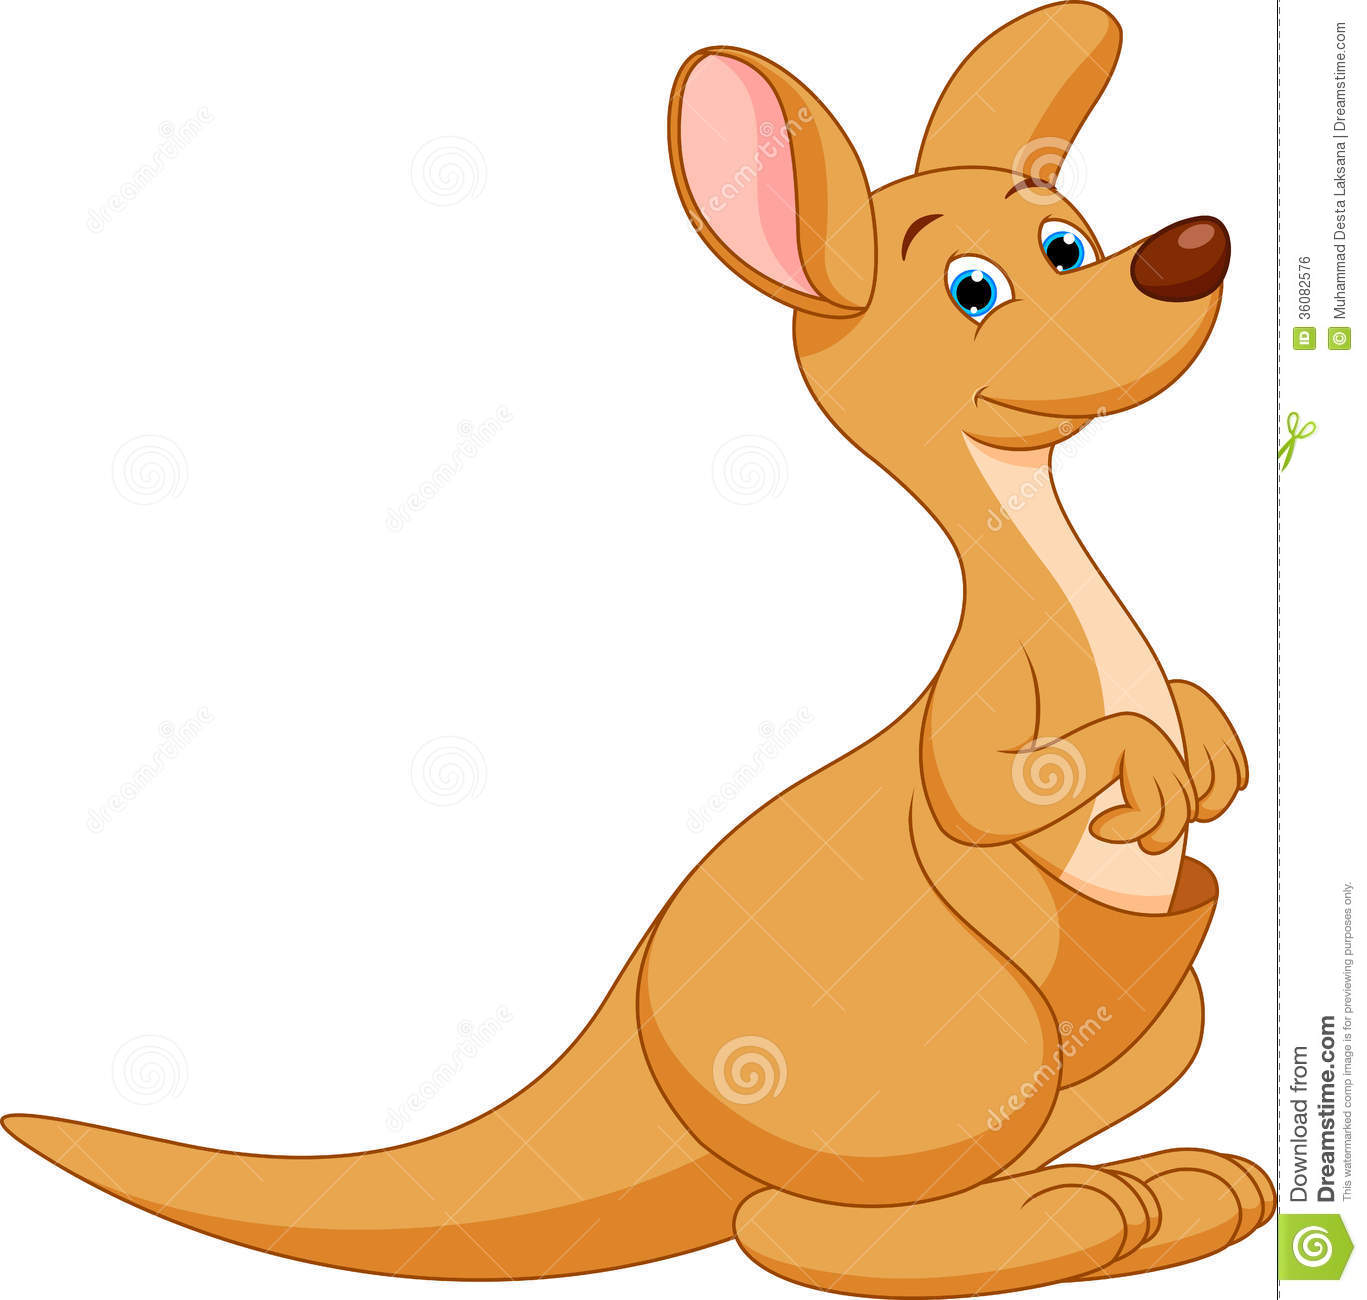 Kangaroo Cartoon Royalty Free Stock Image   Image  36082576